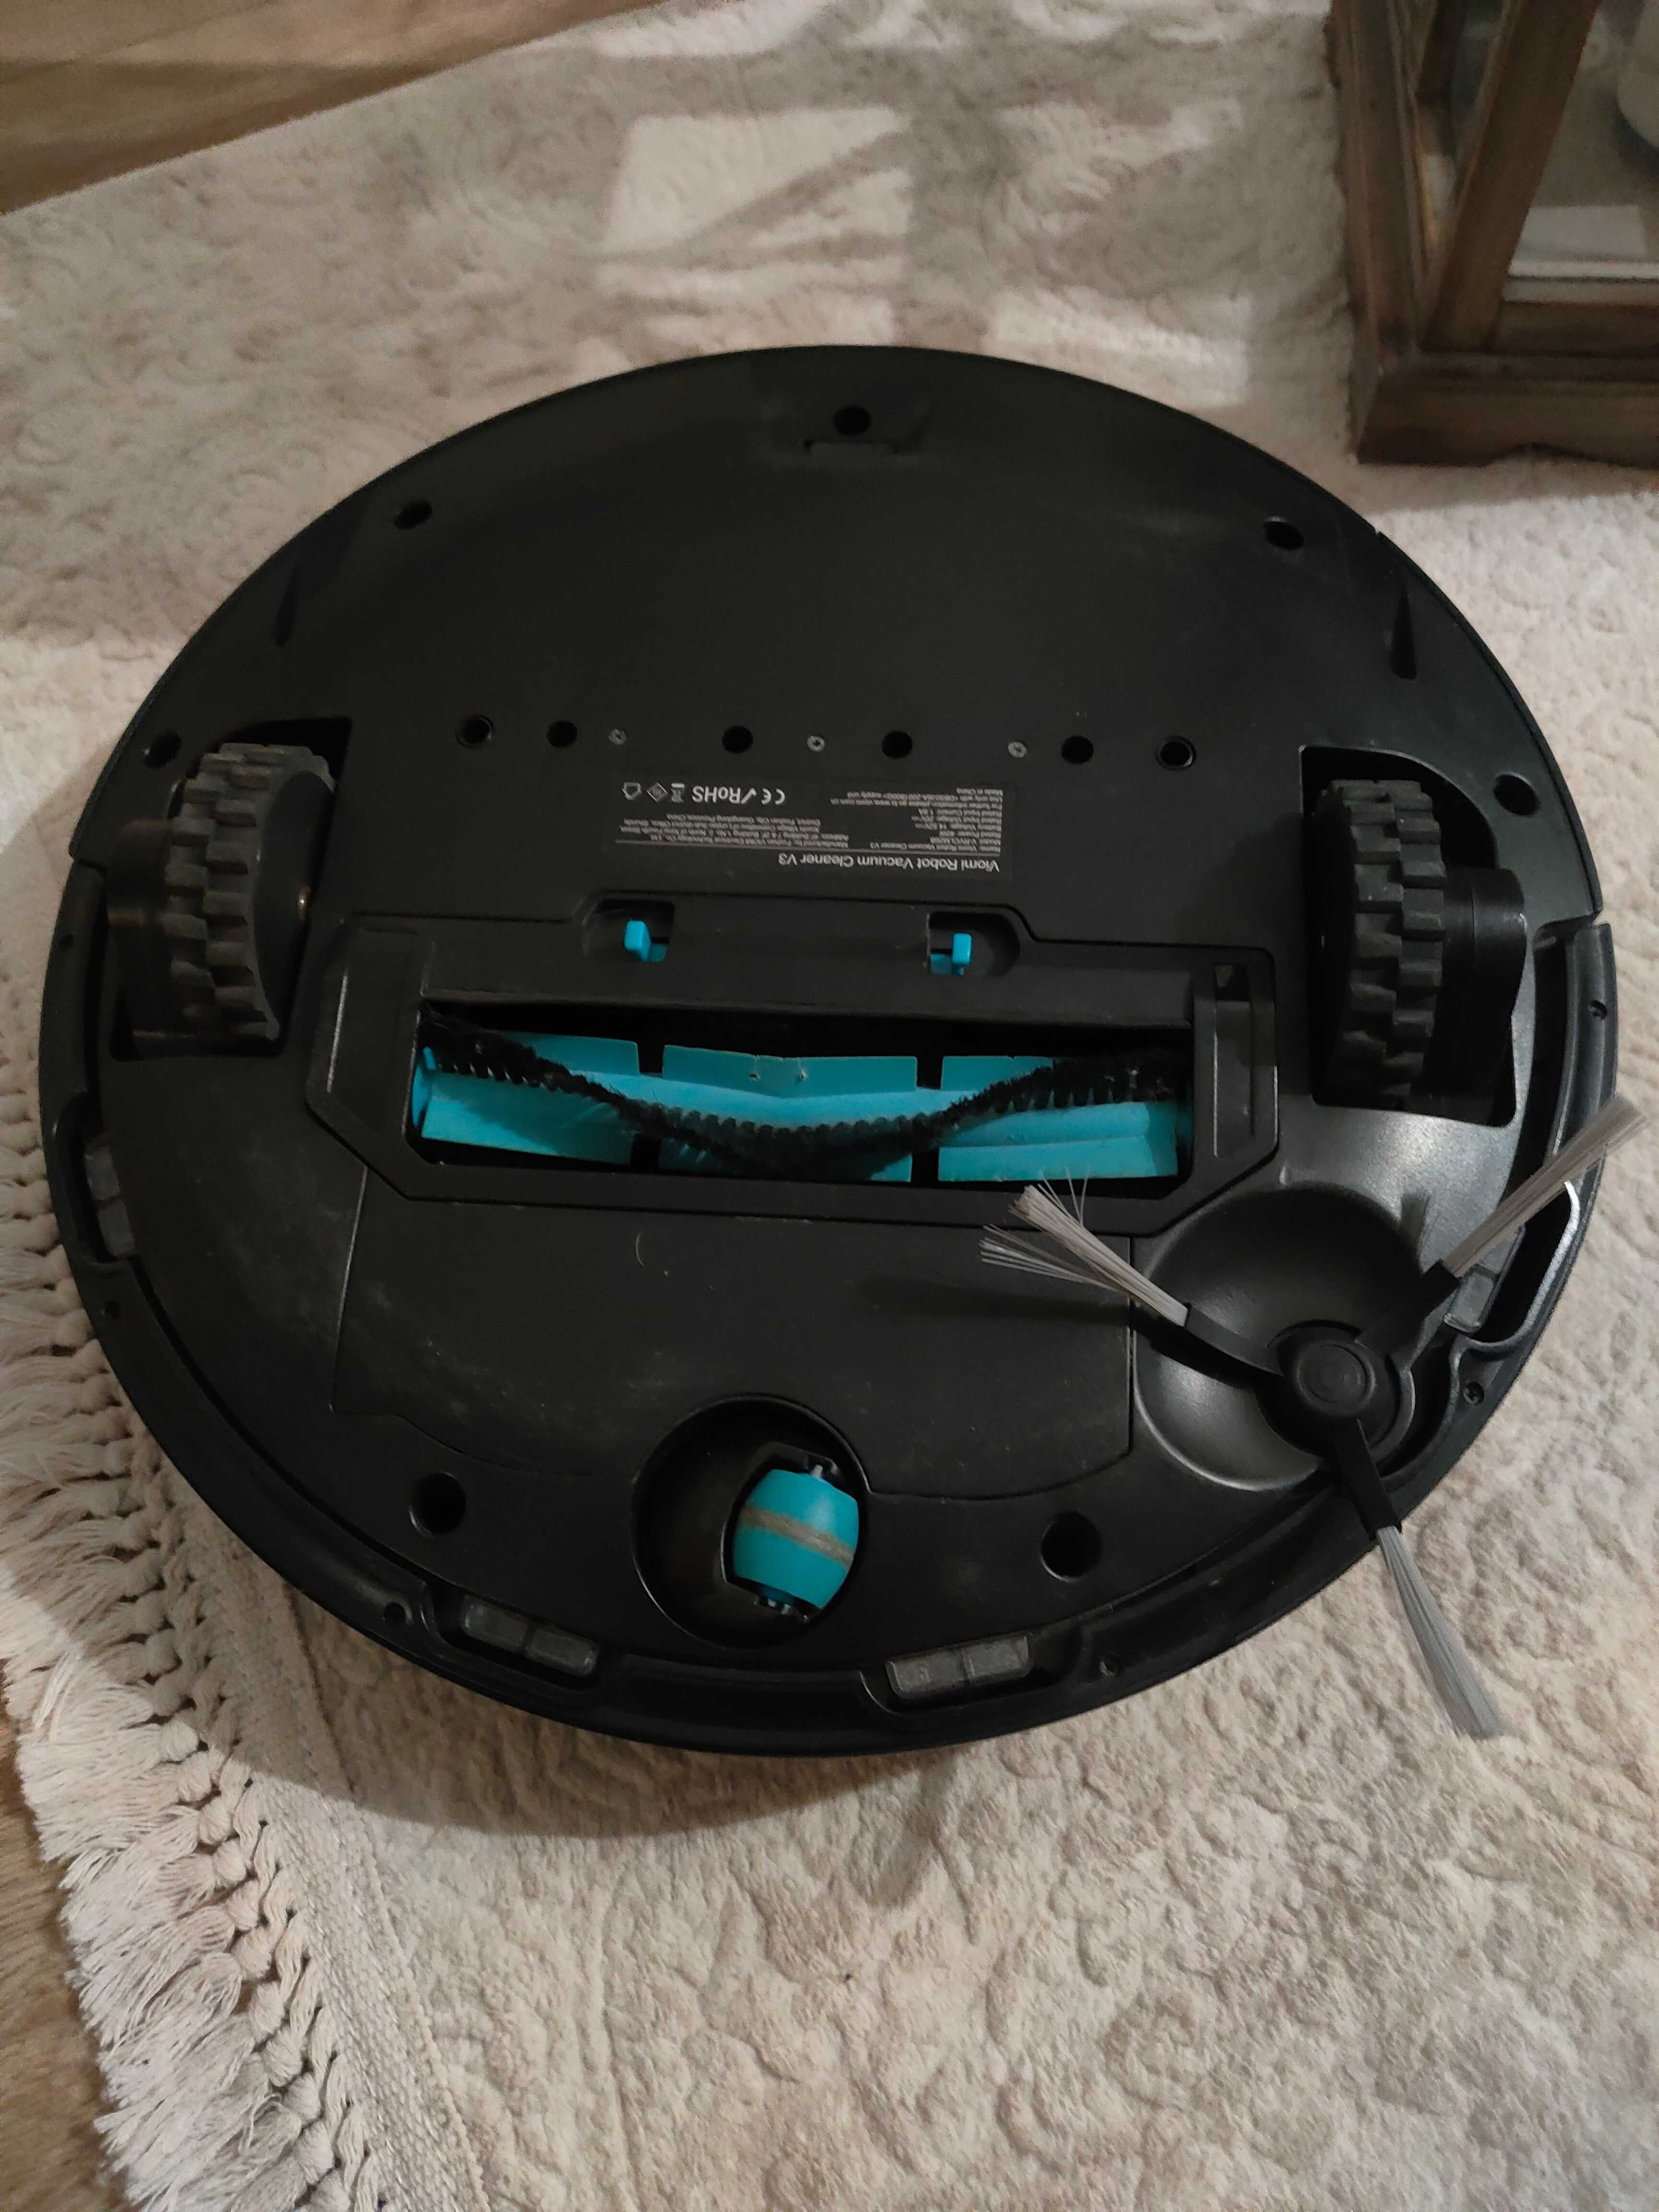 Viomi robot vacuum cleaner v3